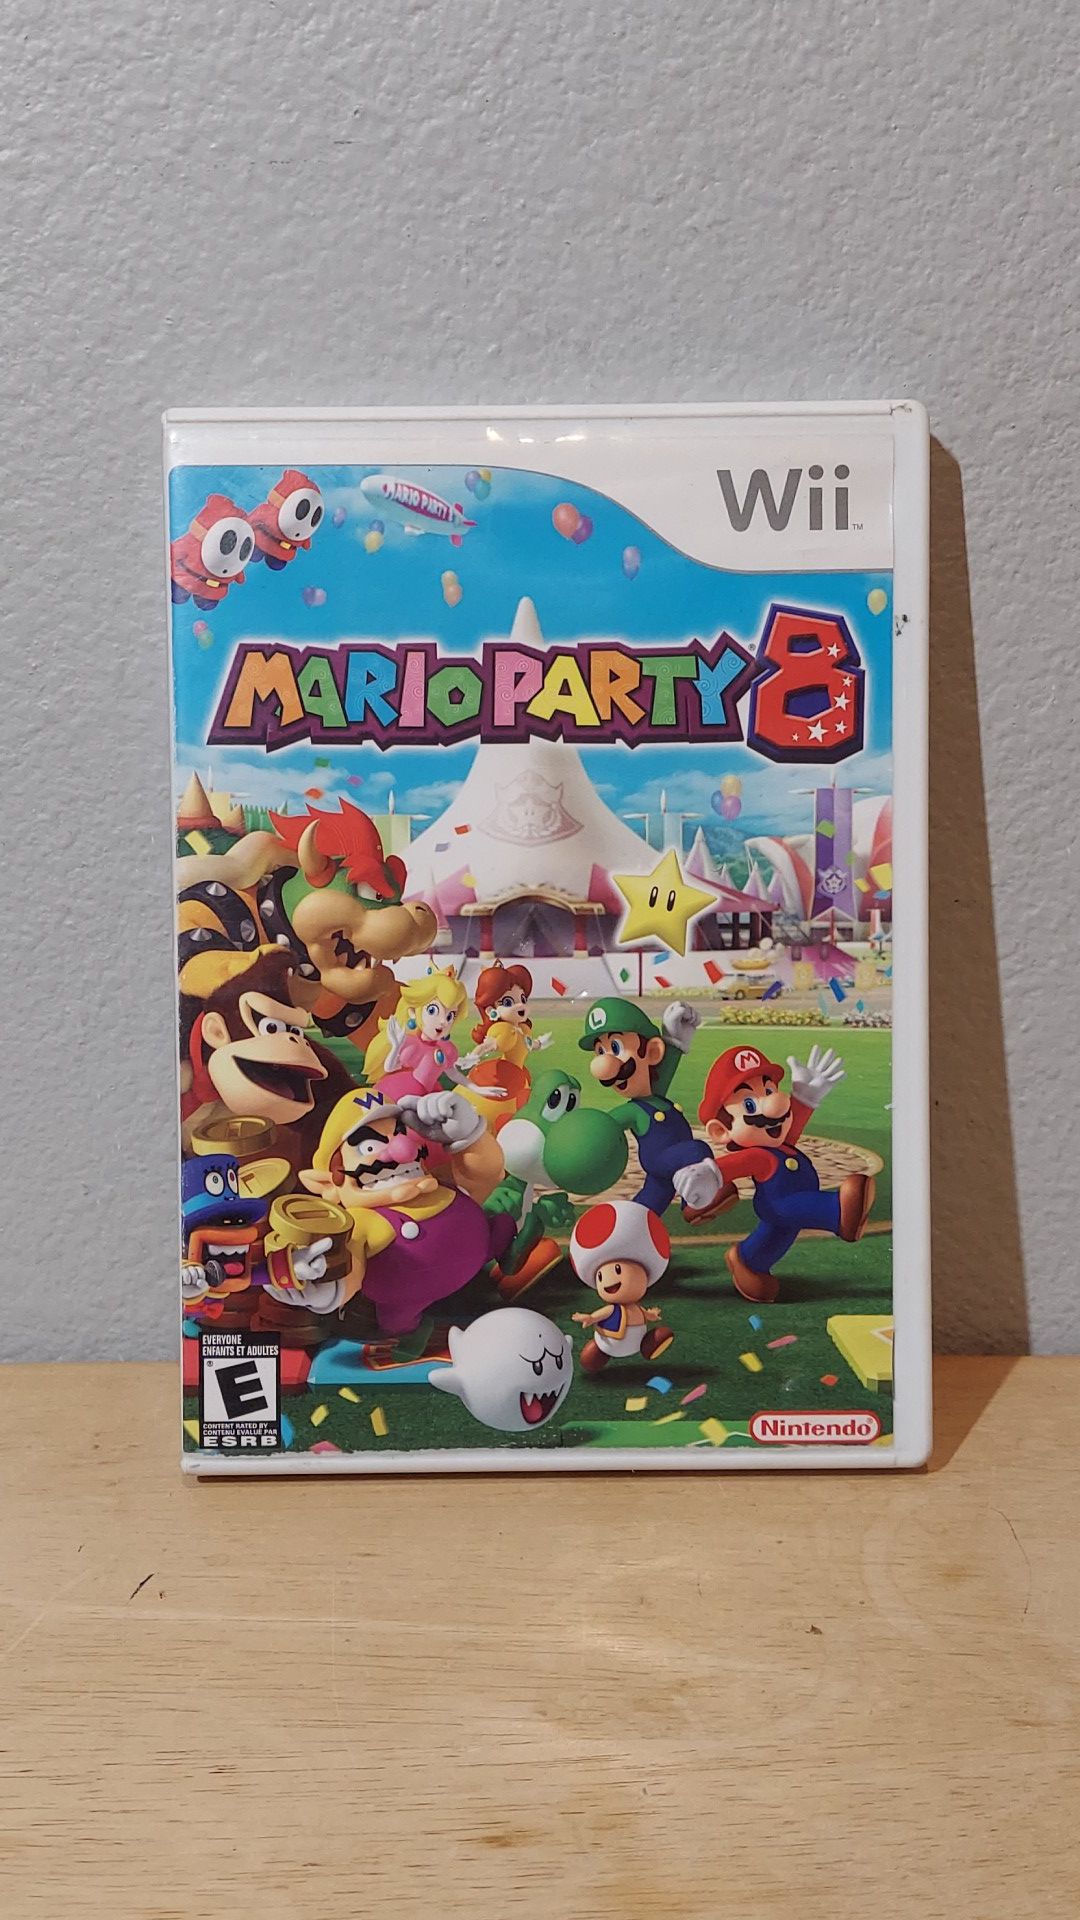 Nintendo Wii Mario Party 8 in Original Box Tested